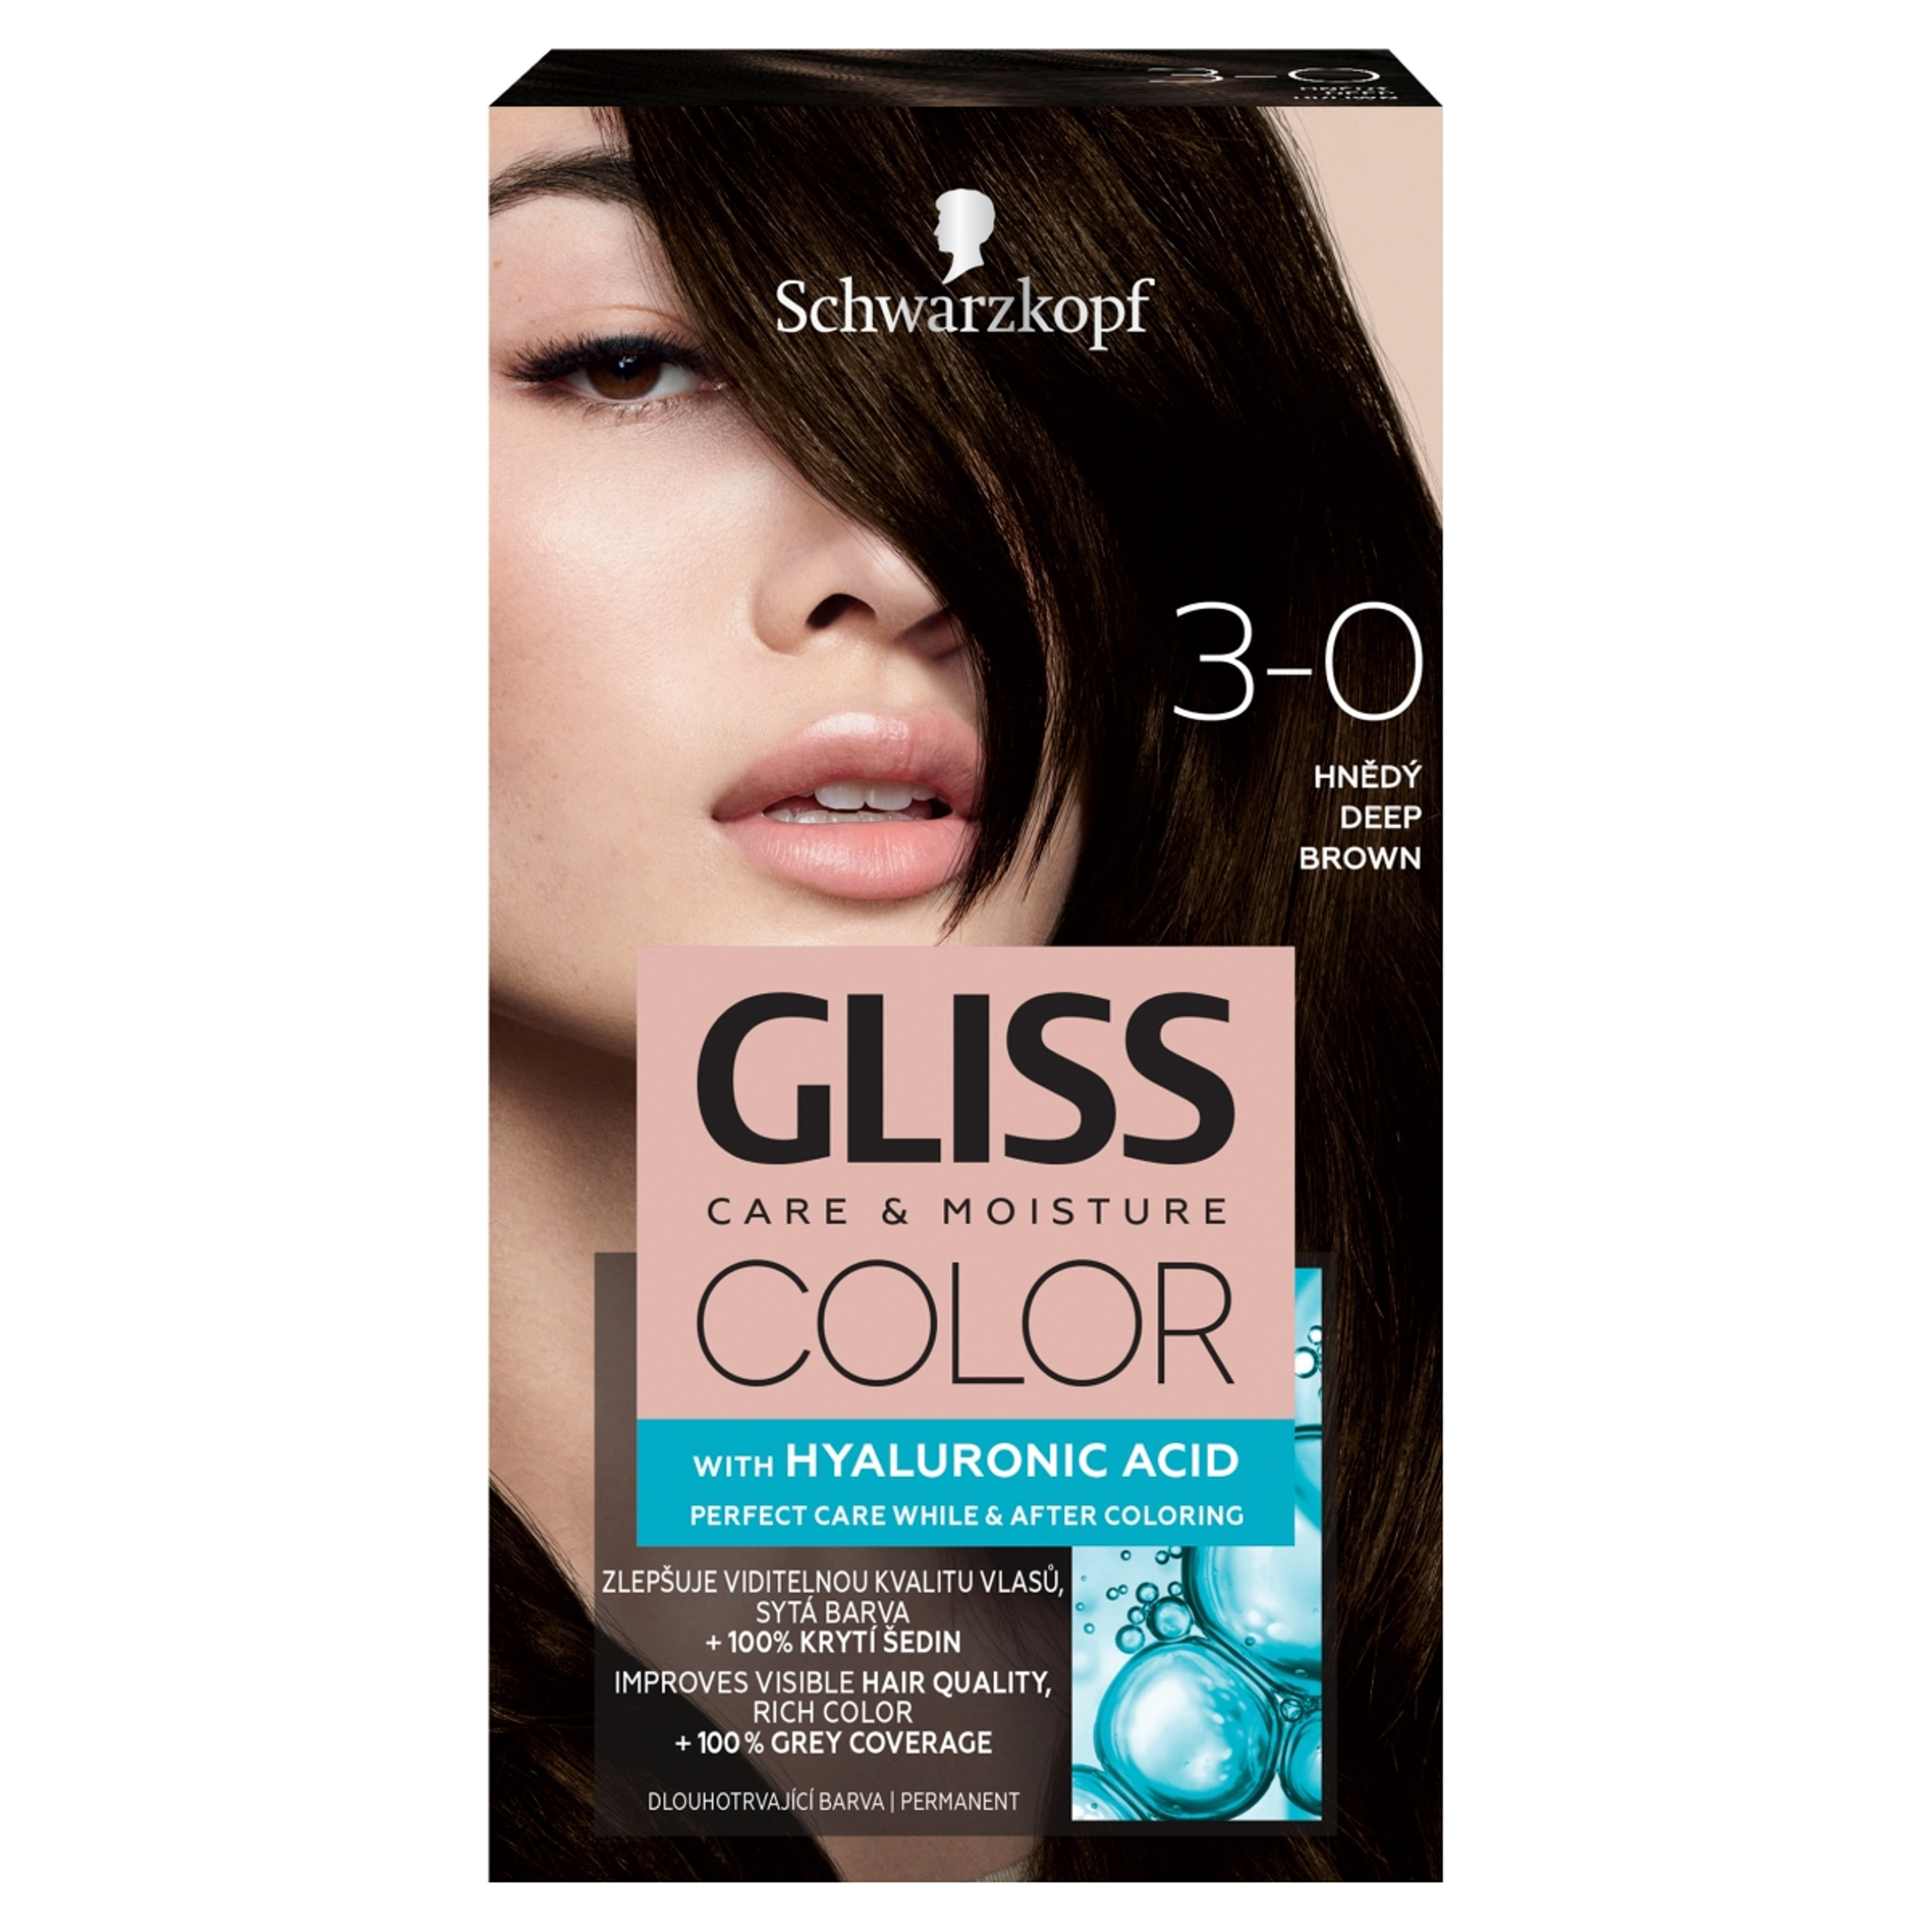 Gliss Color tartós hajfesték 3-0 Mélybarna - 1 db